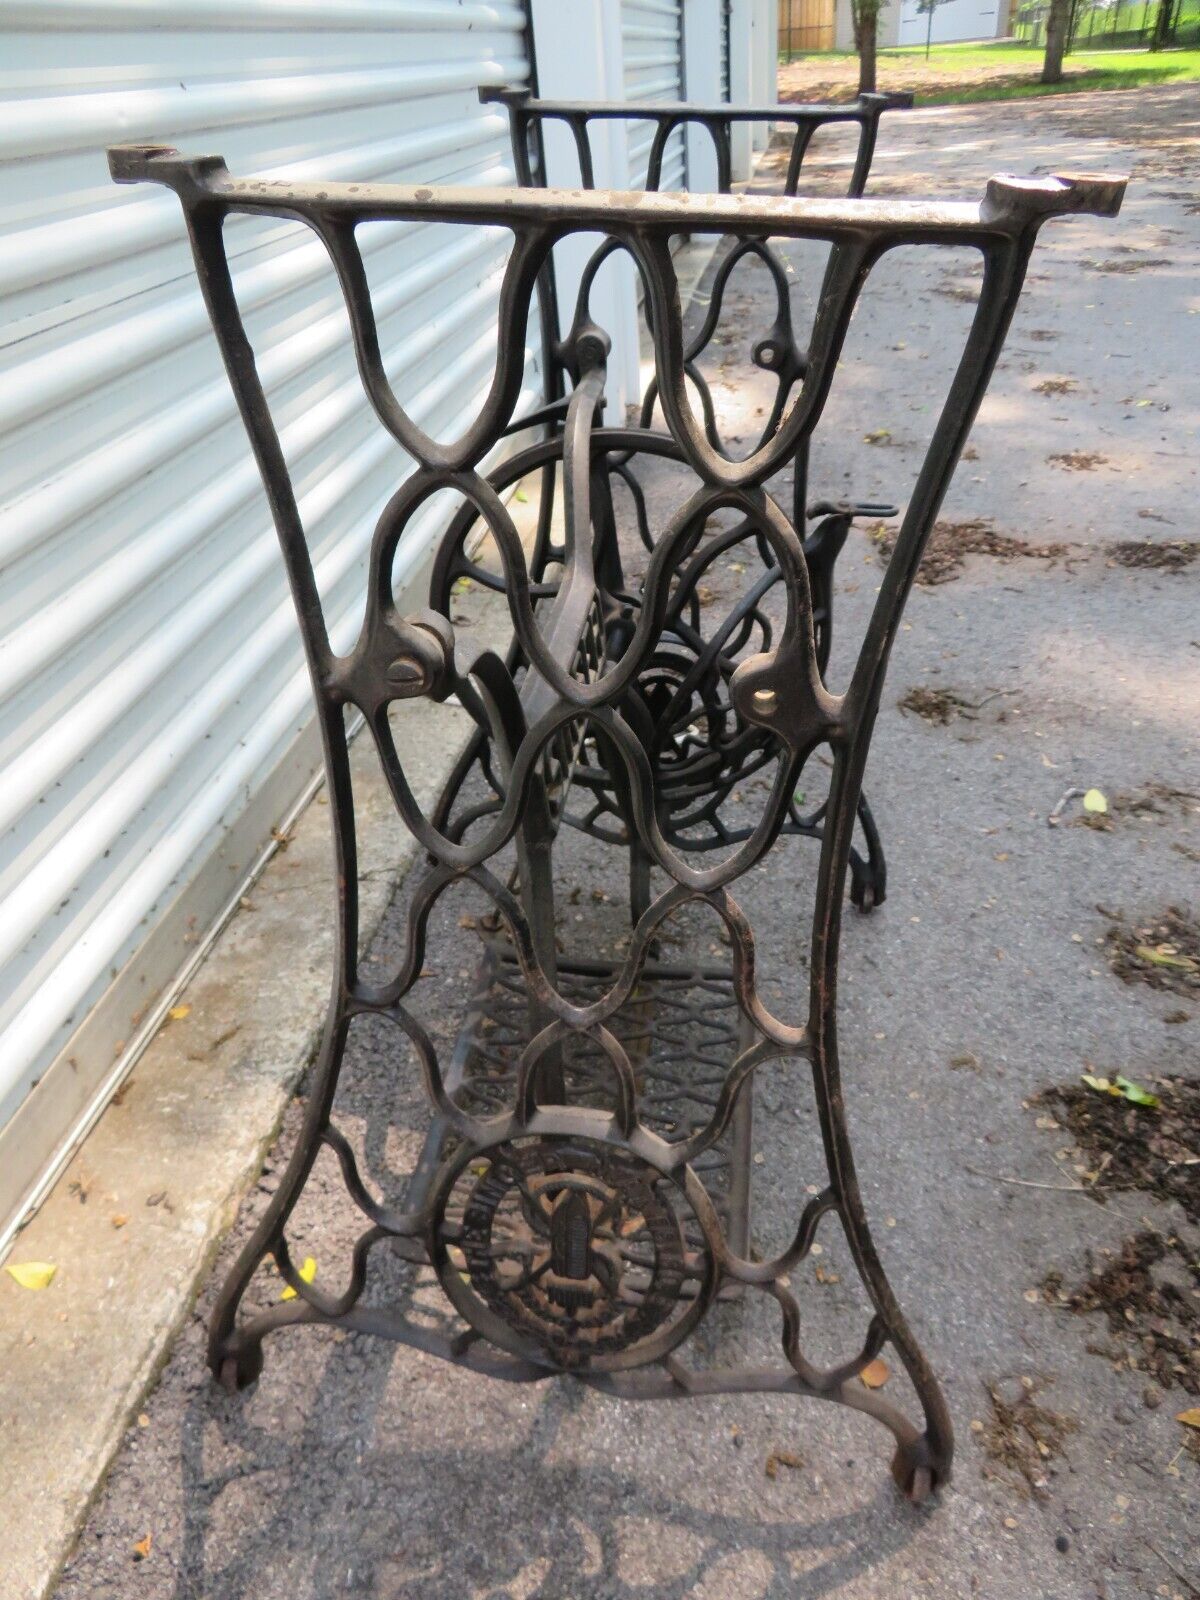 Antique Vintage Industrial Original Singer Sewing Cast Iron Table